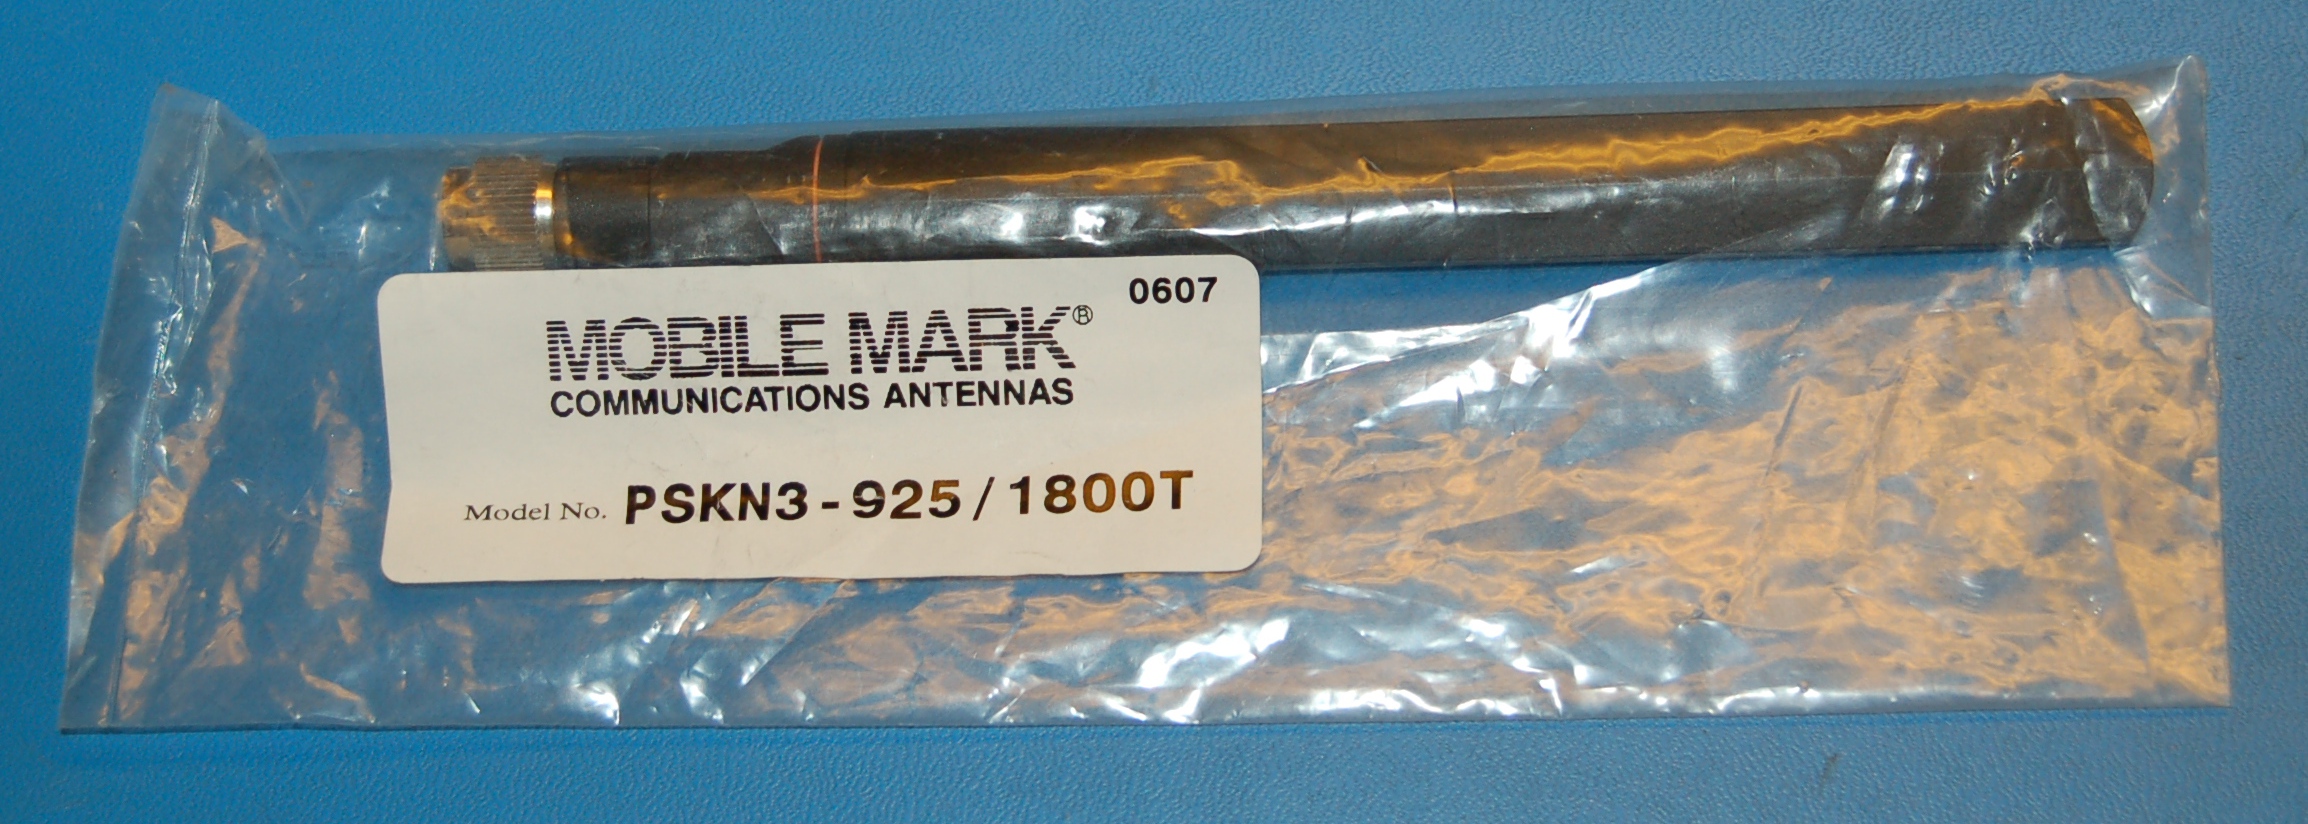 Mobile-Mark PKSN3 Antenna, Dual-Band, TNC